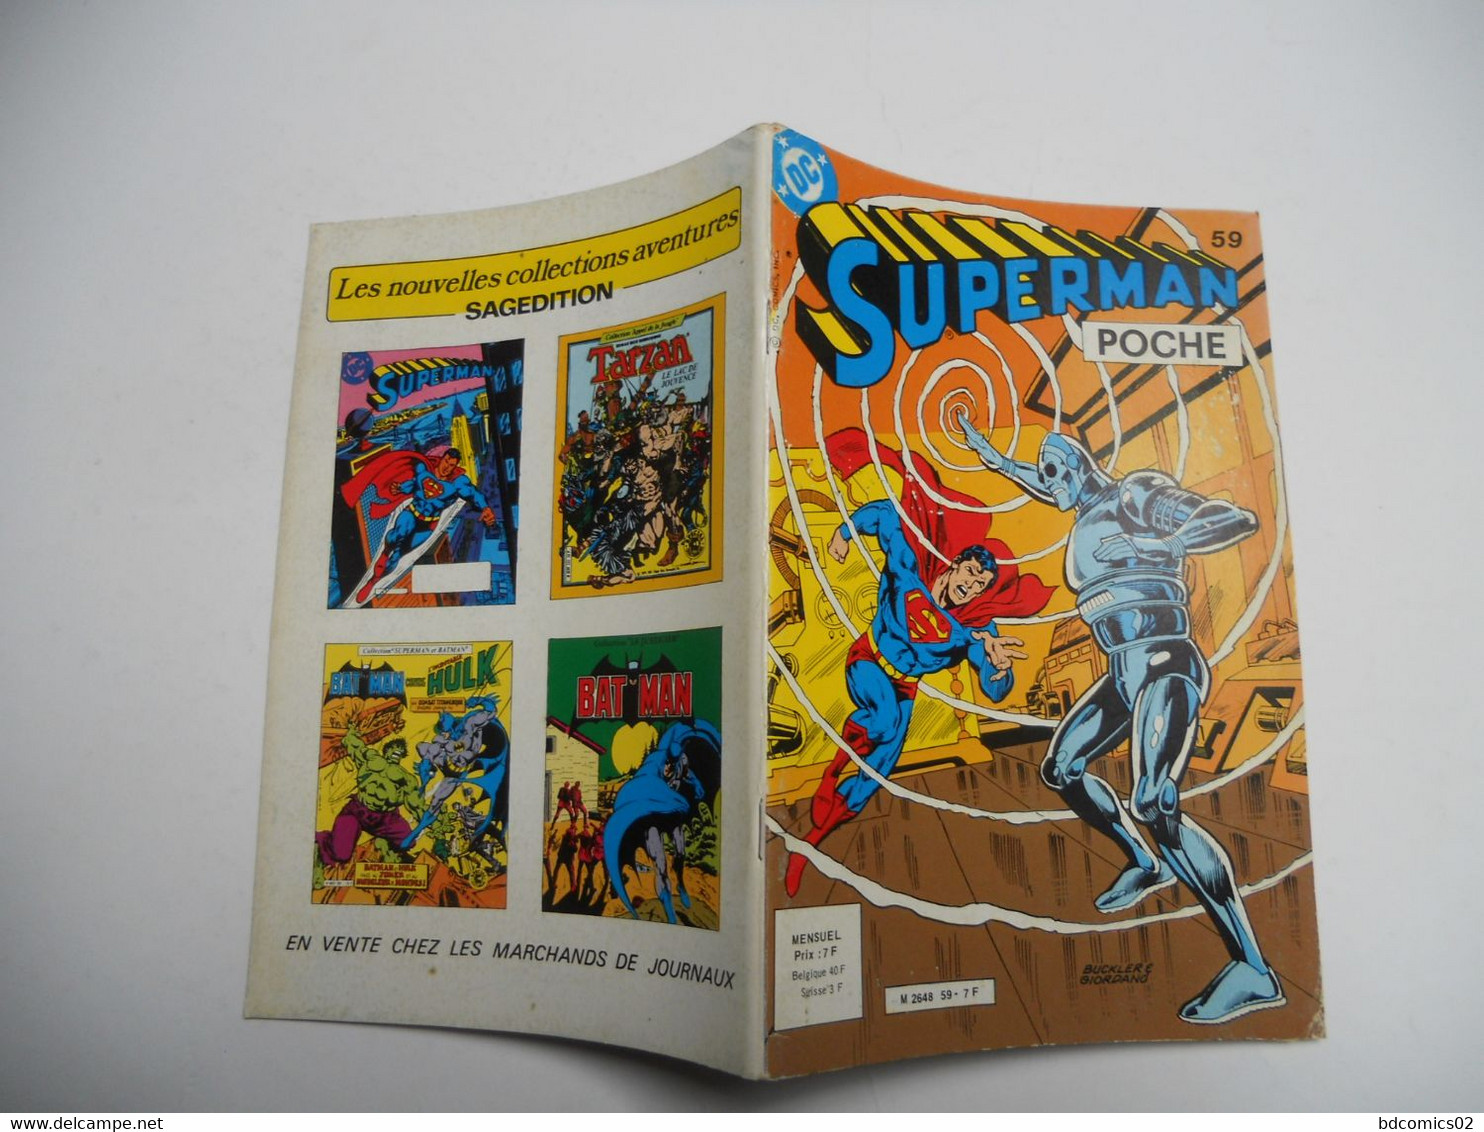 SUPERMAN POCHE N°59 SAGEDITION 1982 EN BON ÉTAT - Superman